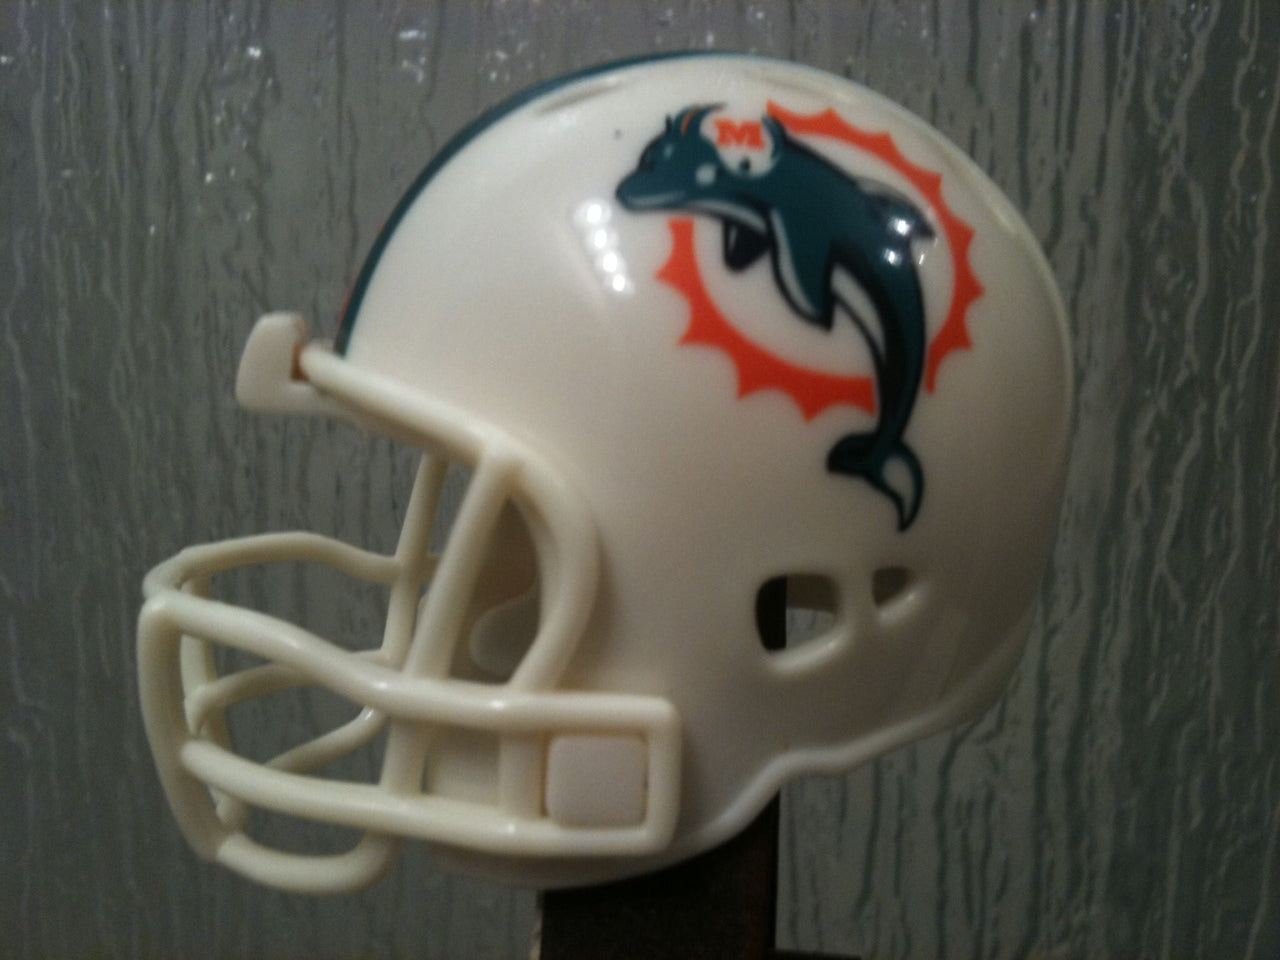 Miami Dolphins Riddell NFL Revolution Pocket Pro Helmet (Alternate White mask)  WESTBROOKSPORTSCARDS   